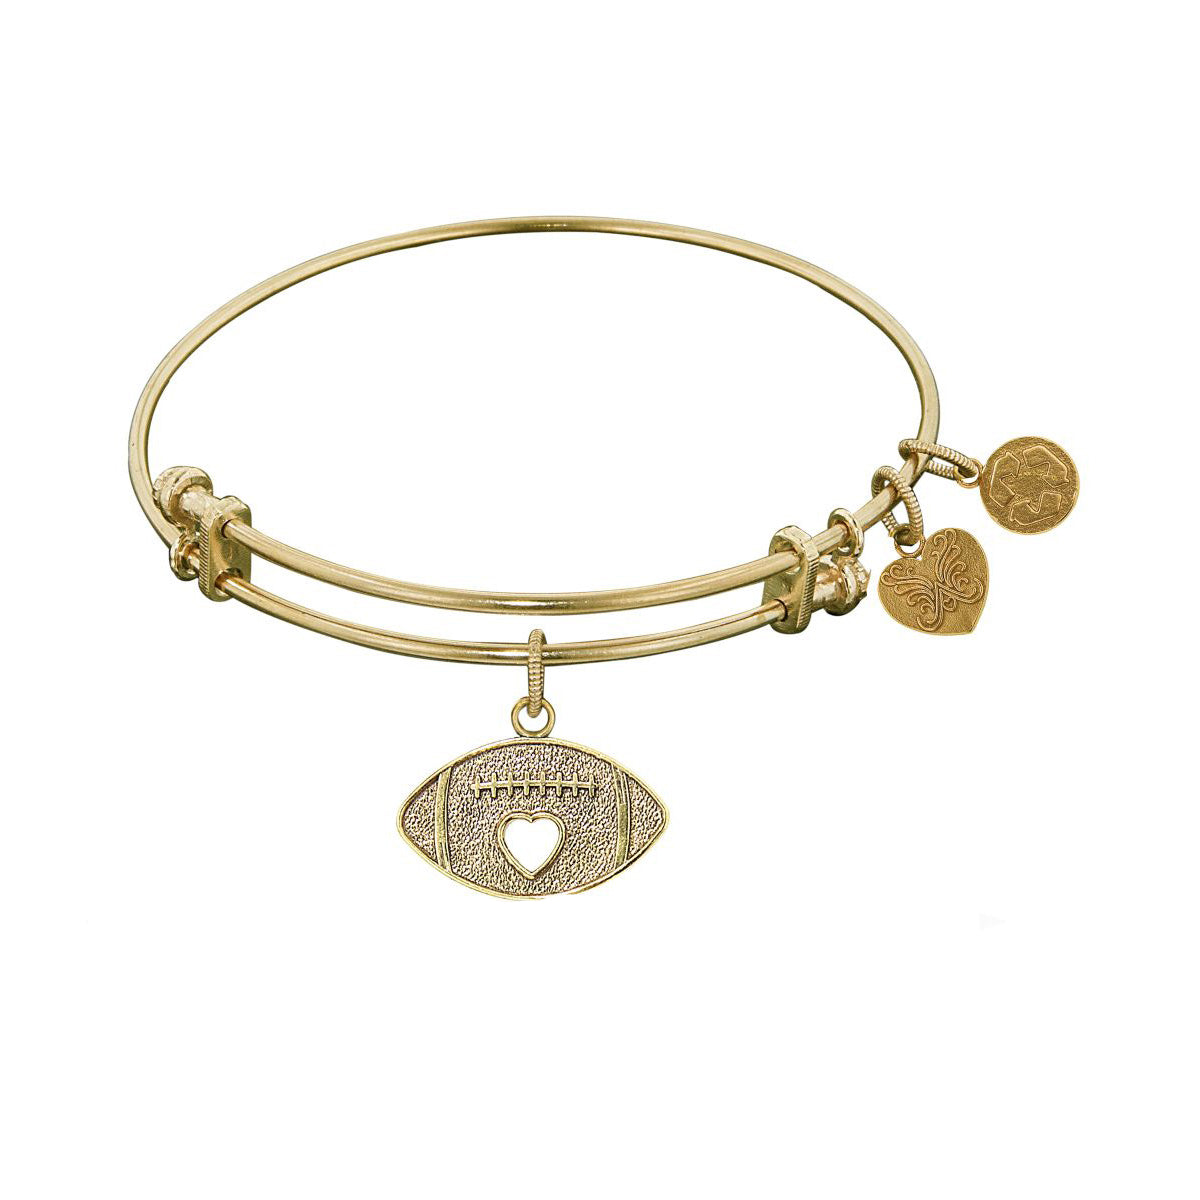 Stipple Finish Brass Football Angelica Bangle Bracelet, 7.25" fine designer jewelry for men and women